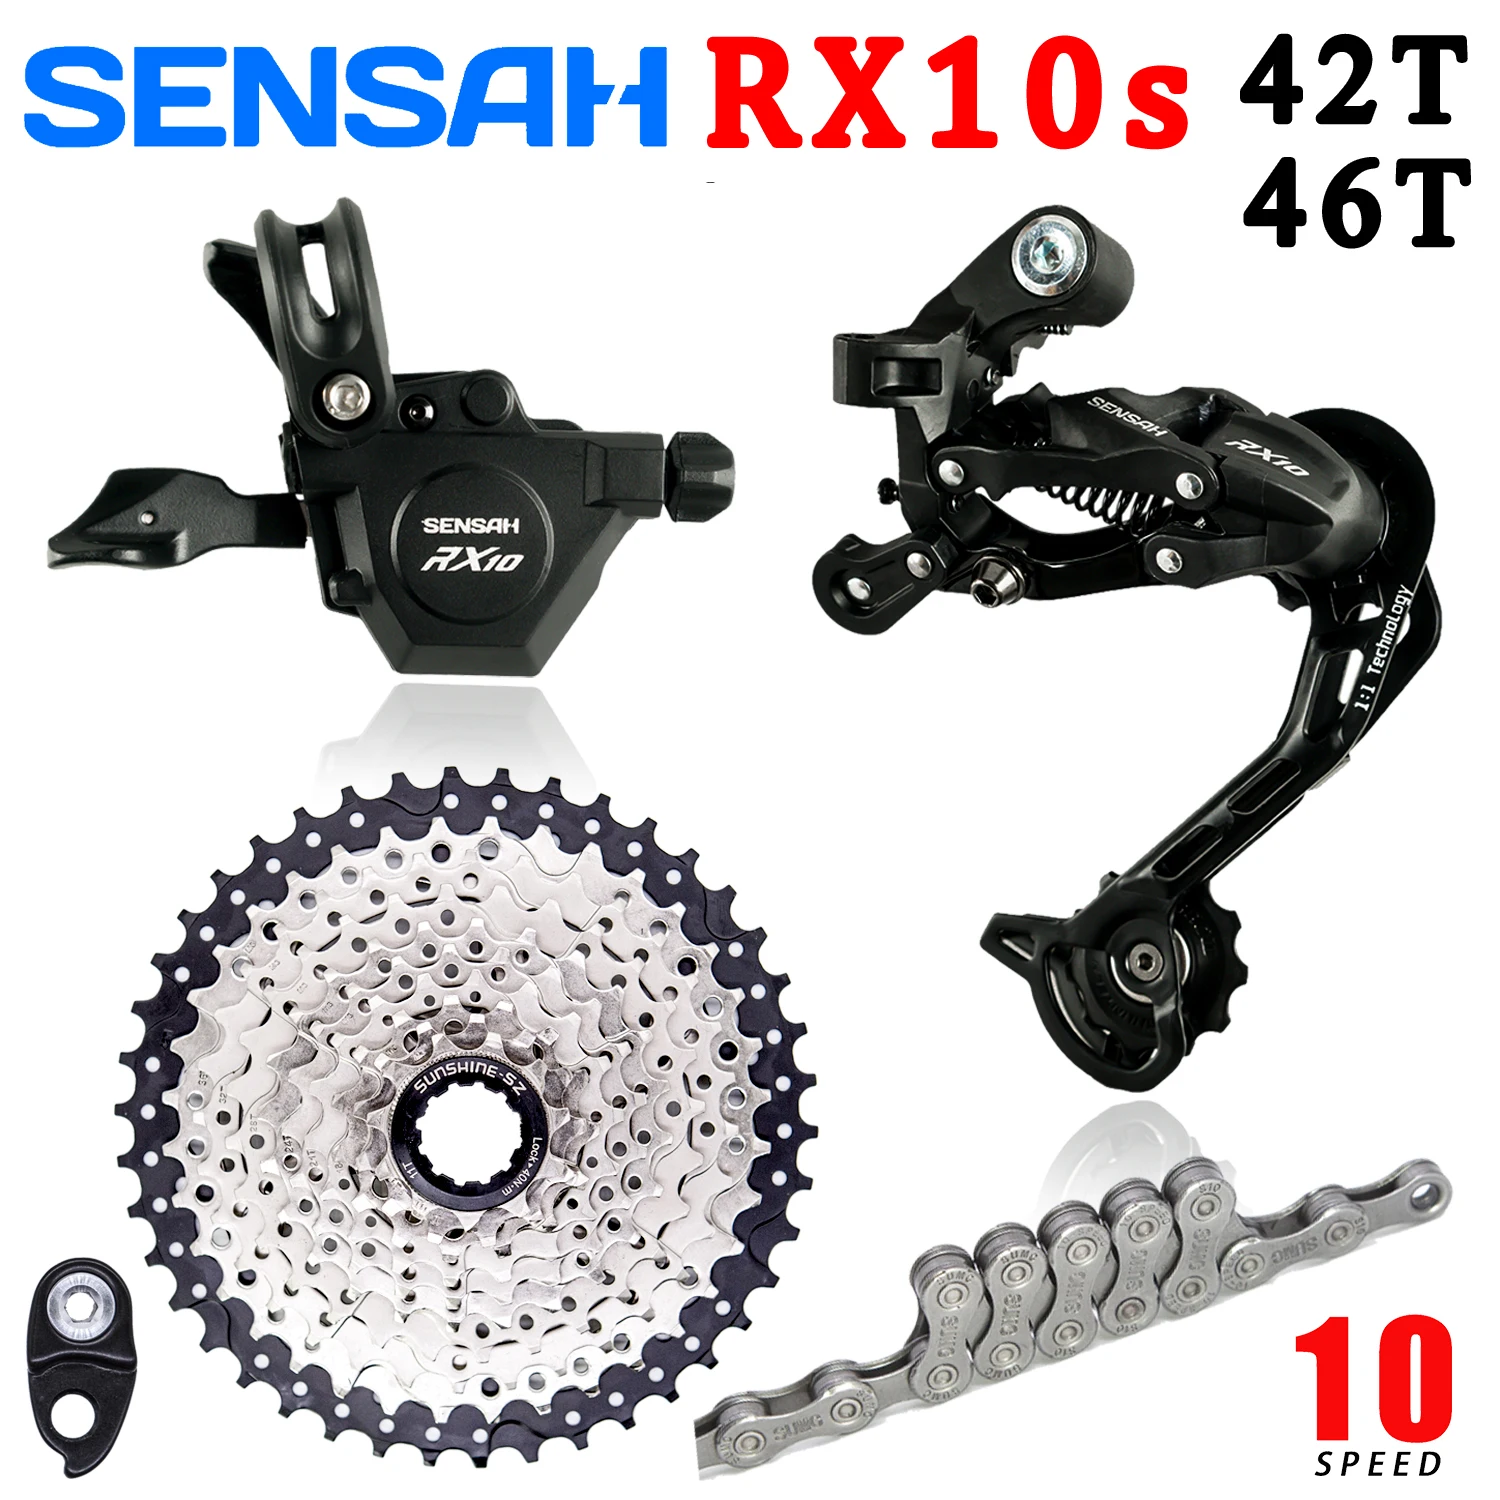 

SENSAH RX10 1x10 Speed Bike MTB M6000 Shifter Derailleurs 11-42T / 46T cassette Chain A5 A7 Bicycle Groupset SHIMANO Deore s New